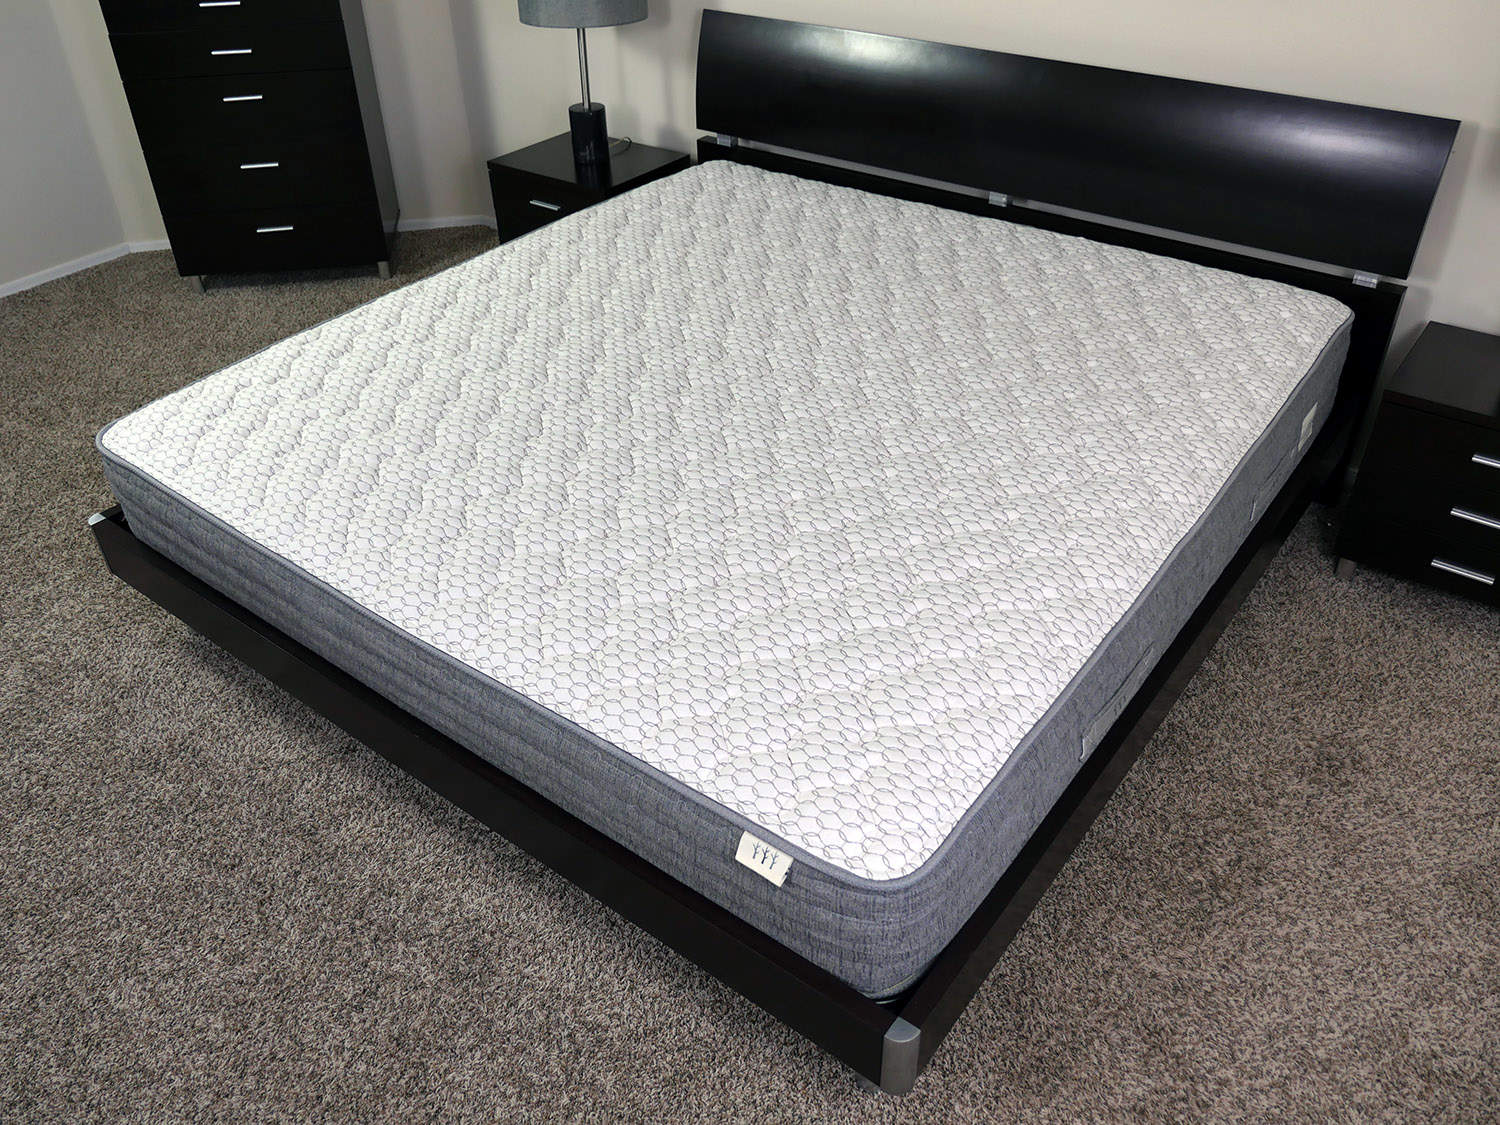 sierra mattress 9 inch wayfair